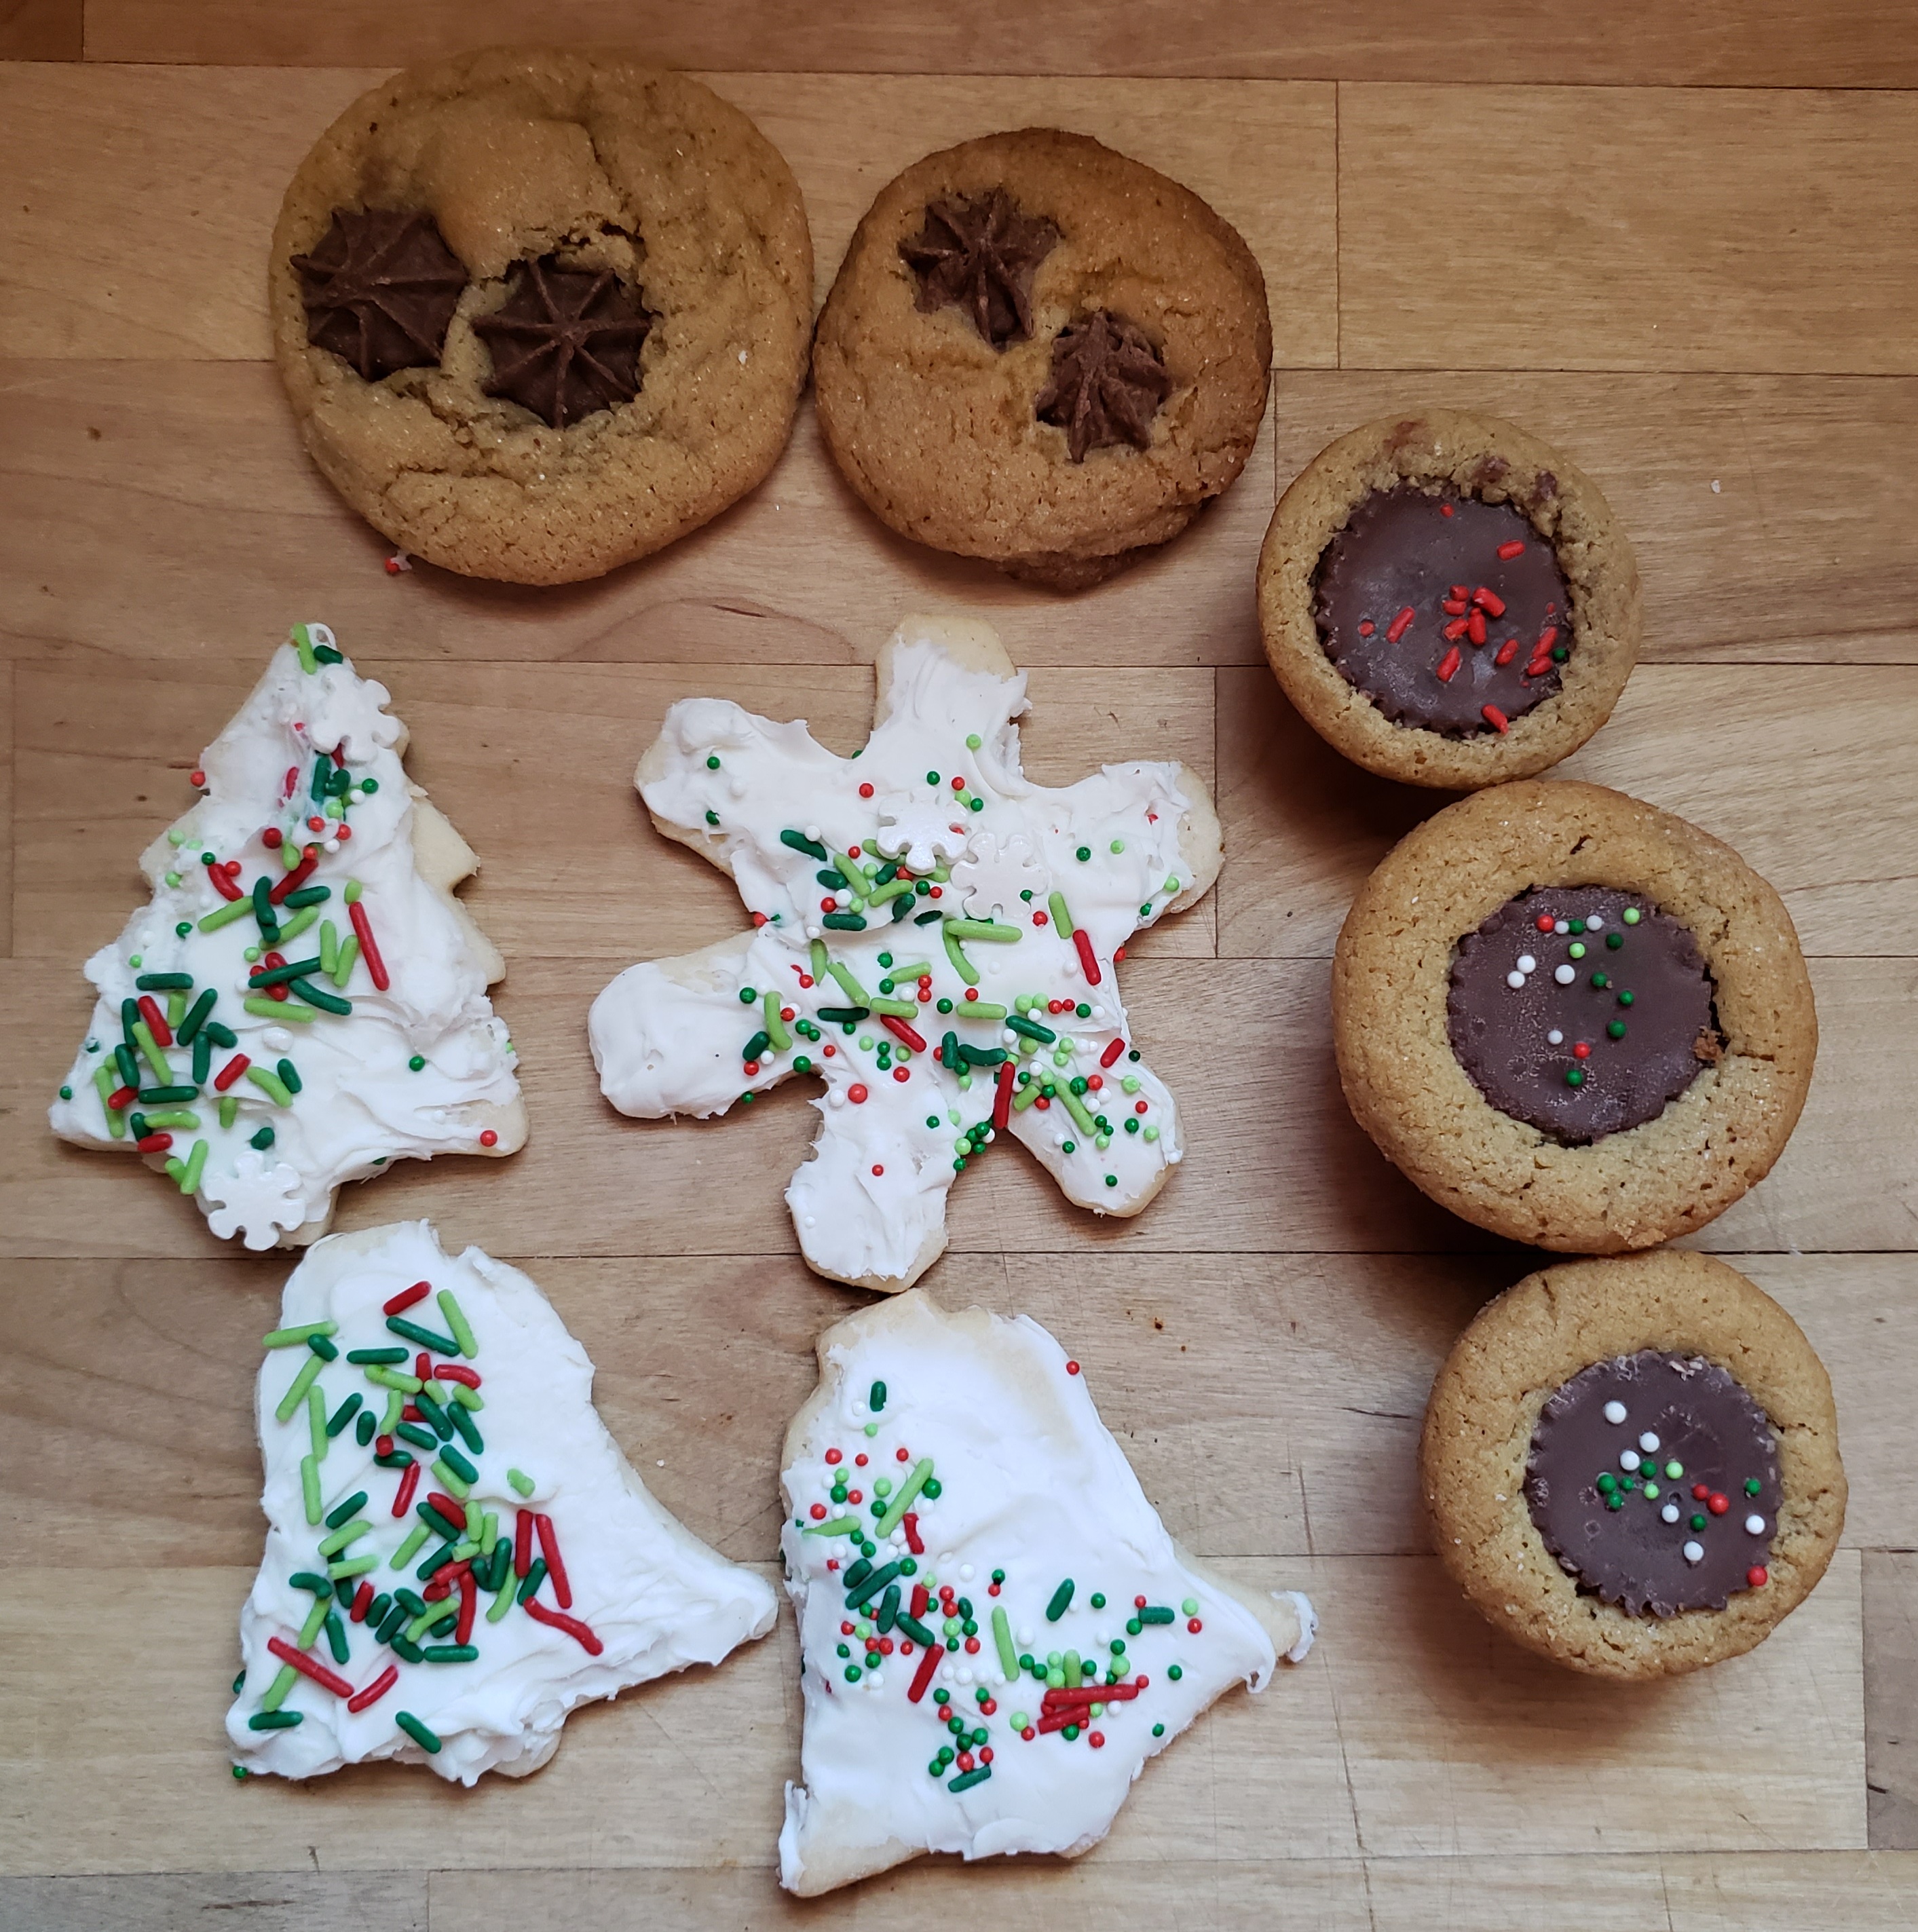 Assortment of Christmas cookies